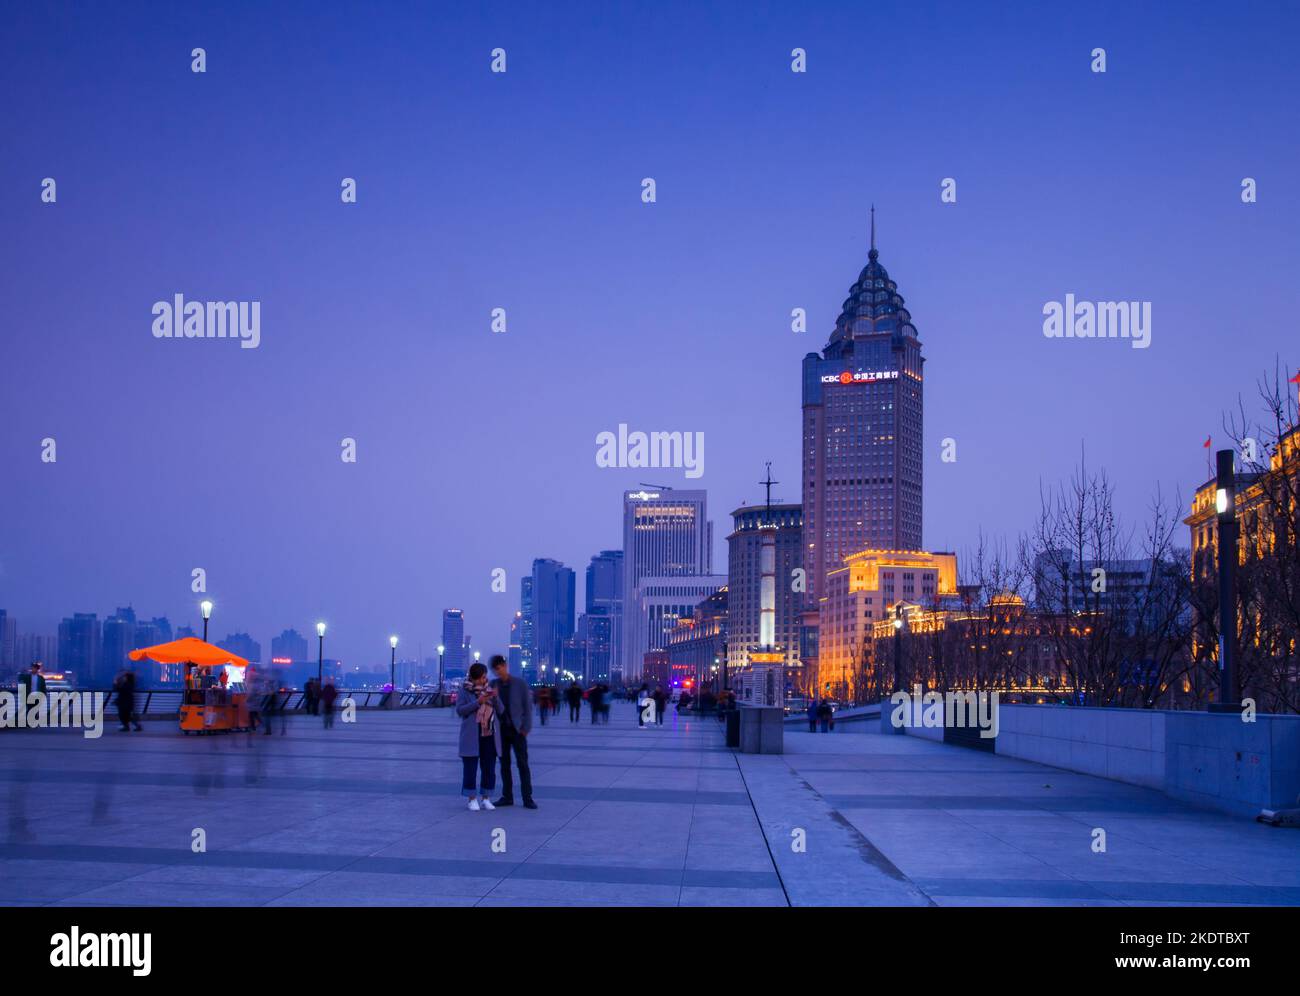 The bund in Shanghai Stock Photo - Alamy